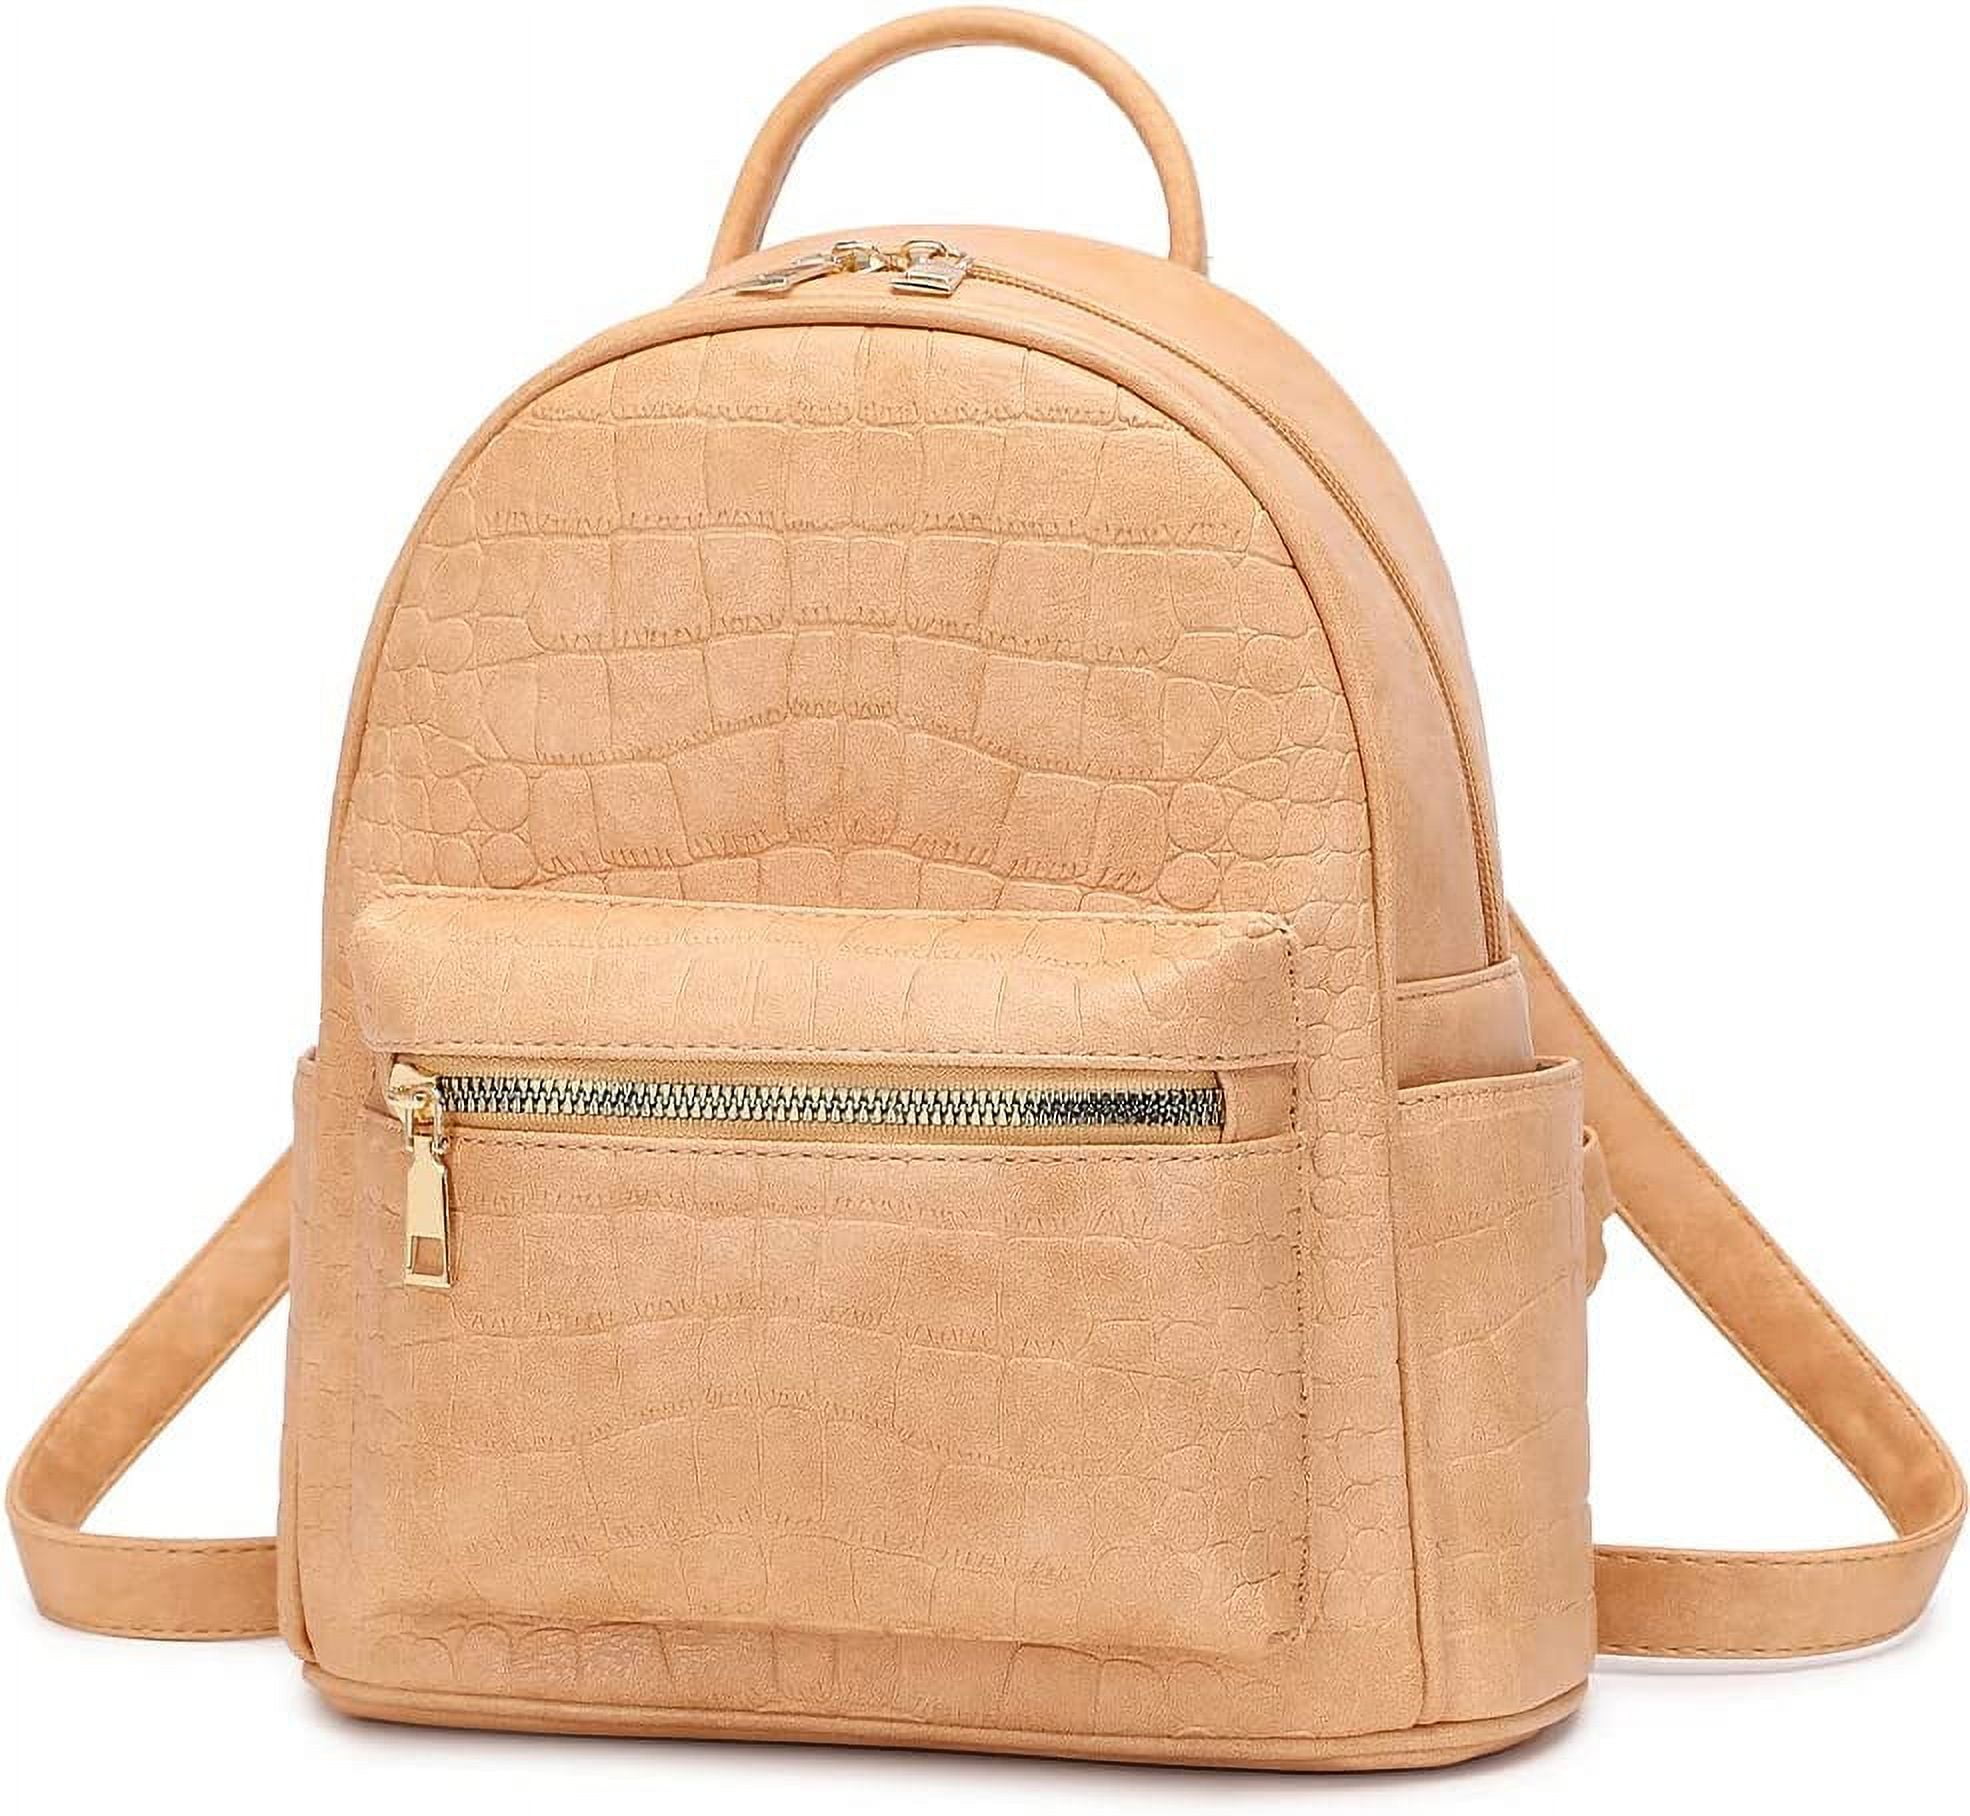 Zmnew Women's Fashion Backpack Purses Multipurpose Design Convertible Satchel Handbags And Shoulder Bag Pu Leather Travel Bag B76-Wtake Pink